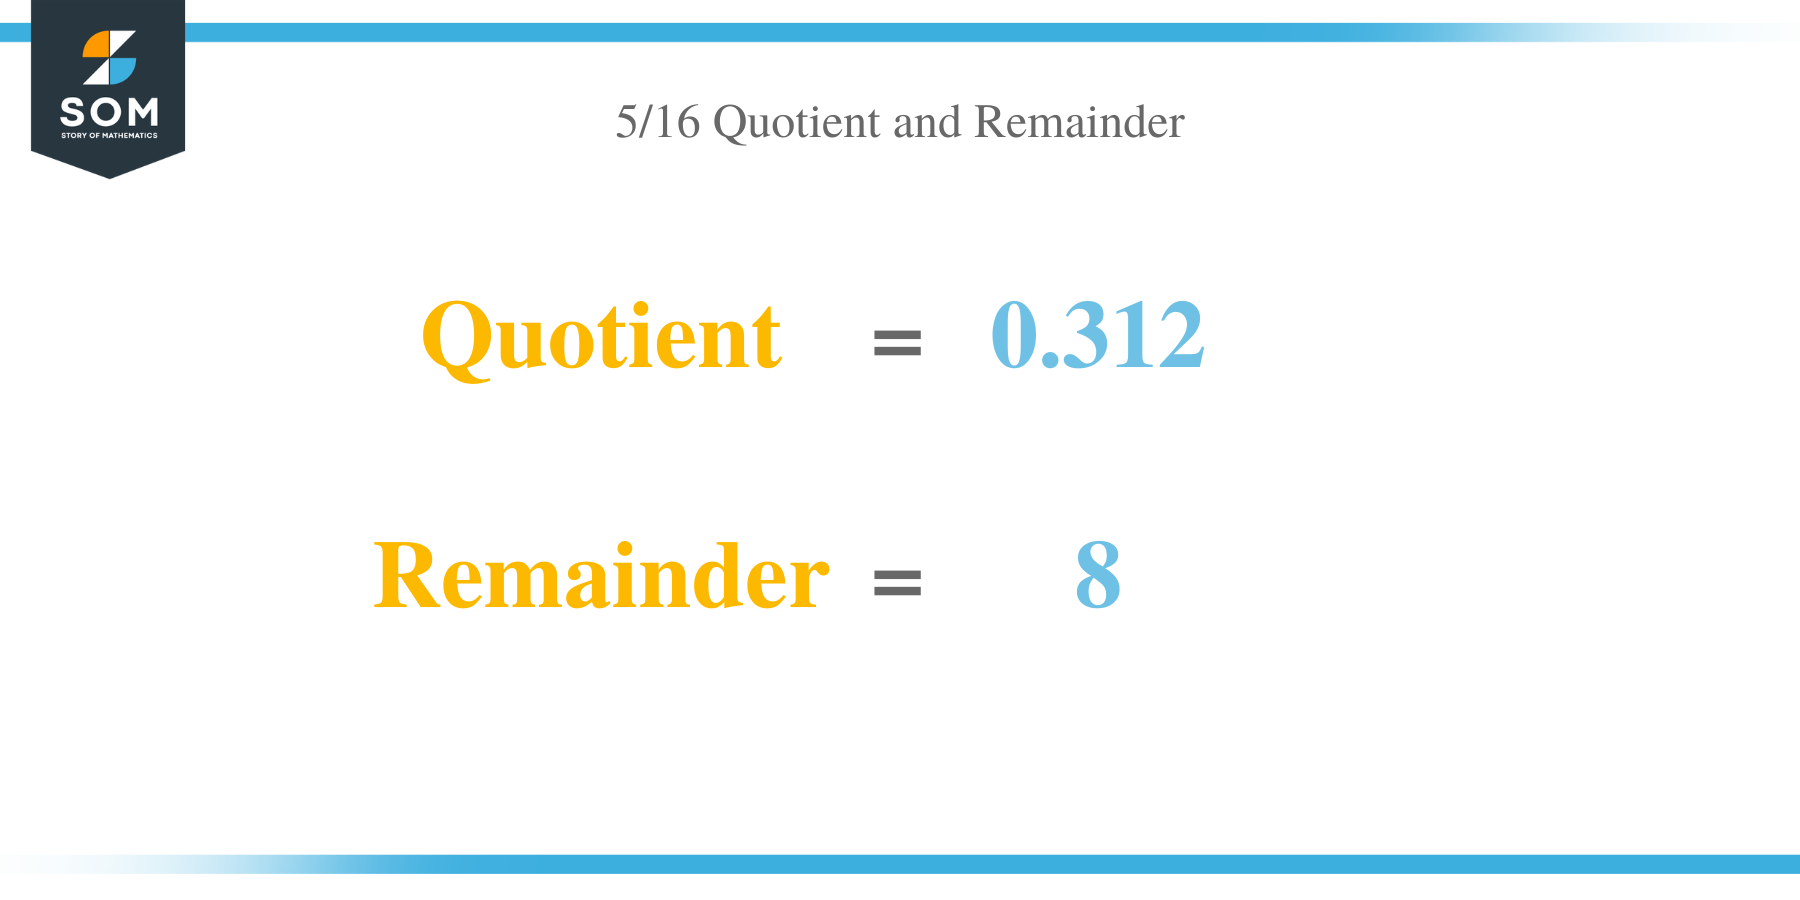 Quotient and remainder of 5 per 16